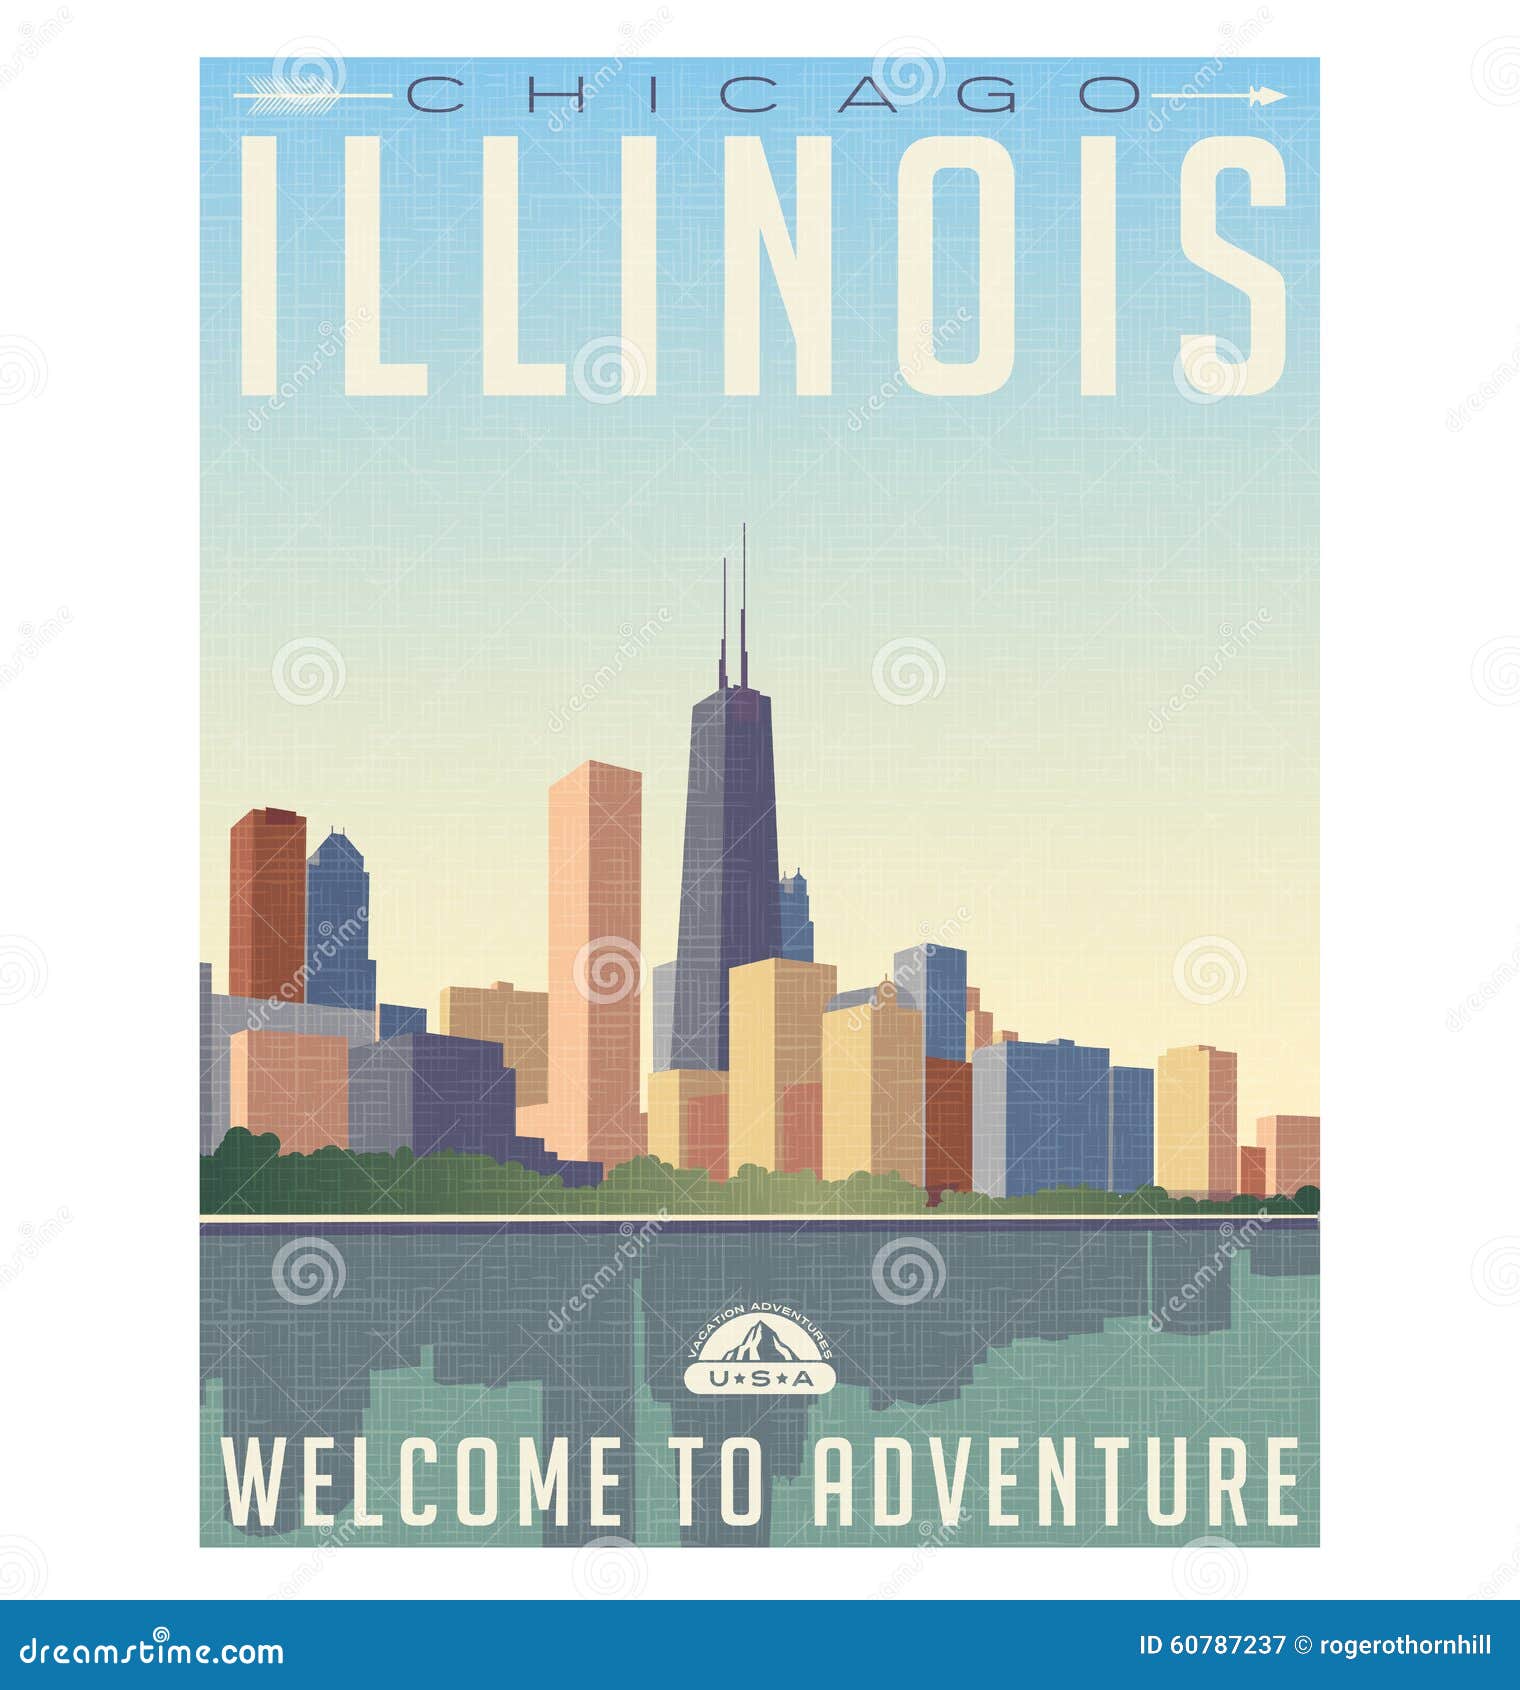 vintage style travel poster of chicago illinois skyline